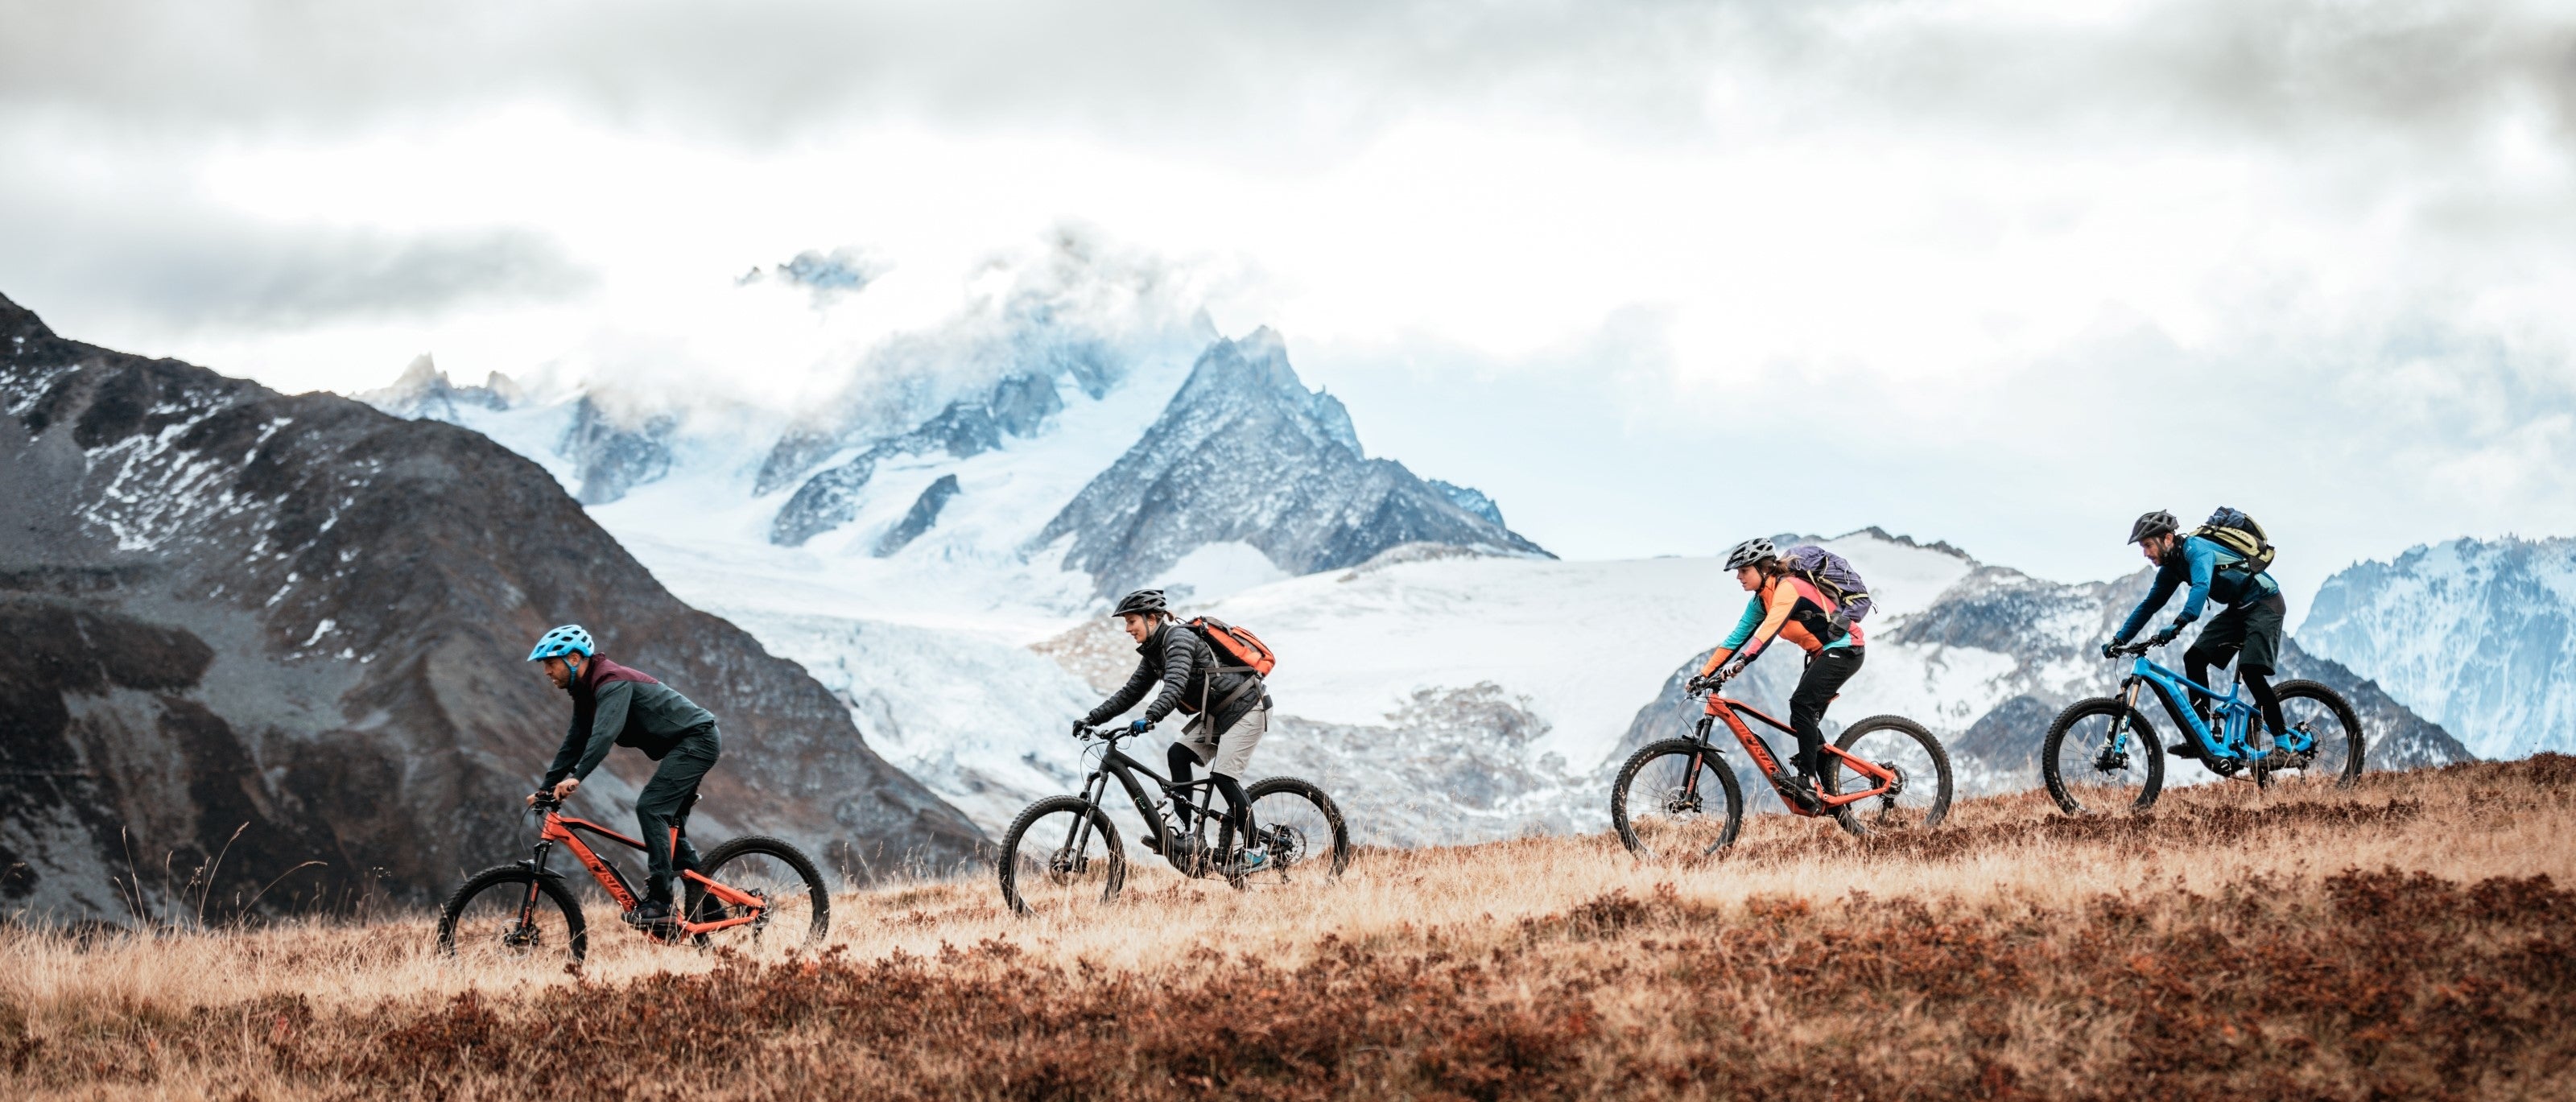 Twin Peaks | Riding the E-bike Haute Route From Chamonix to Zermatt